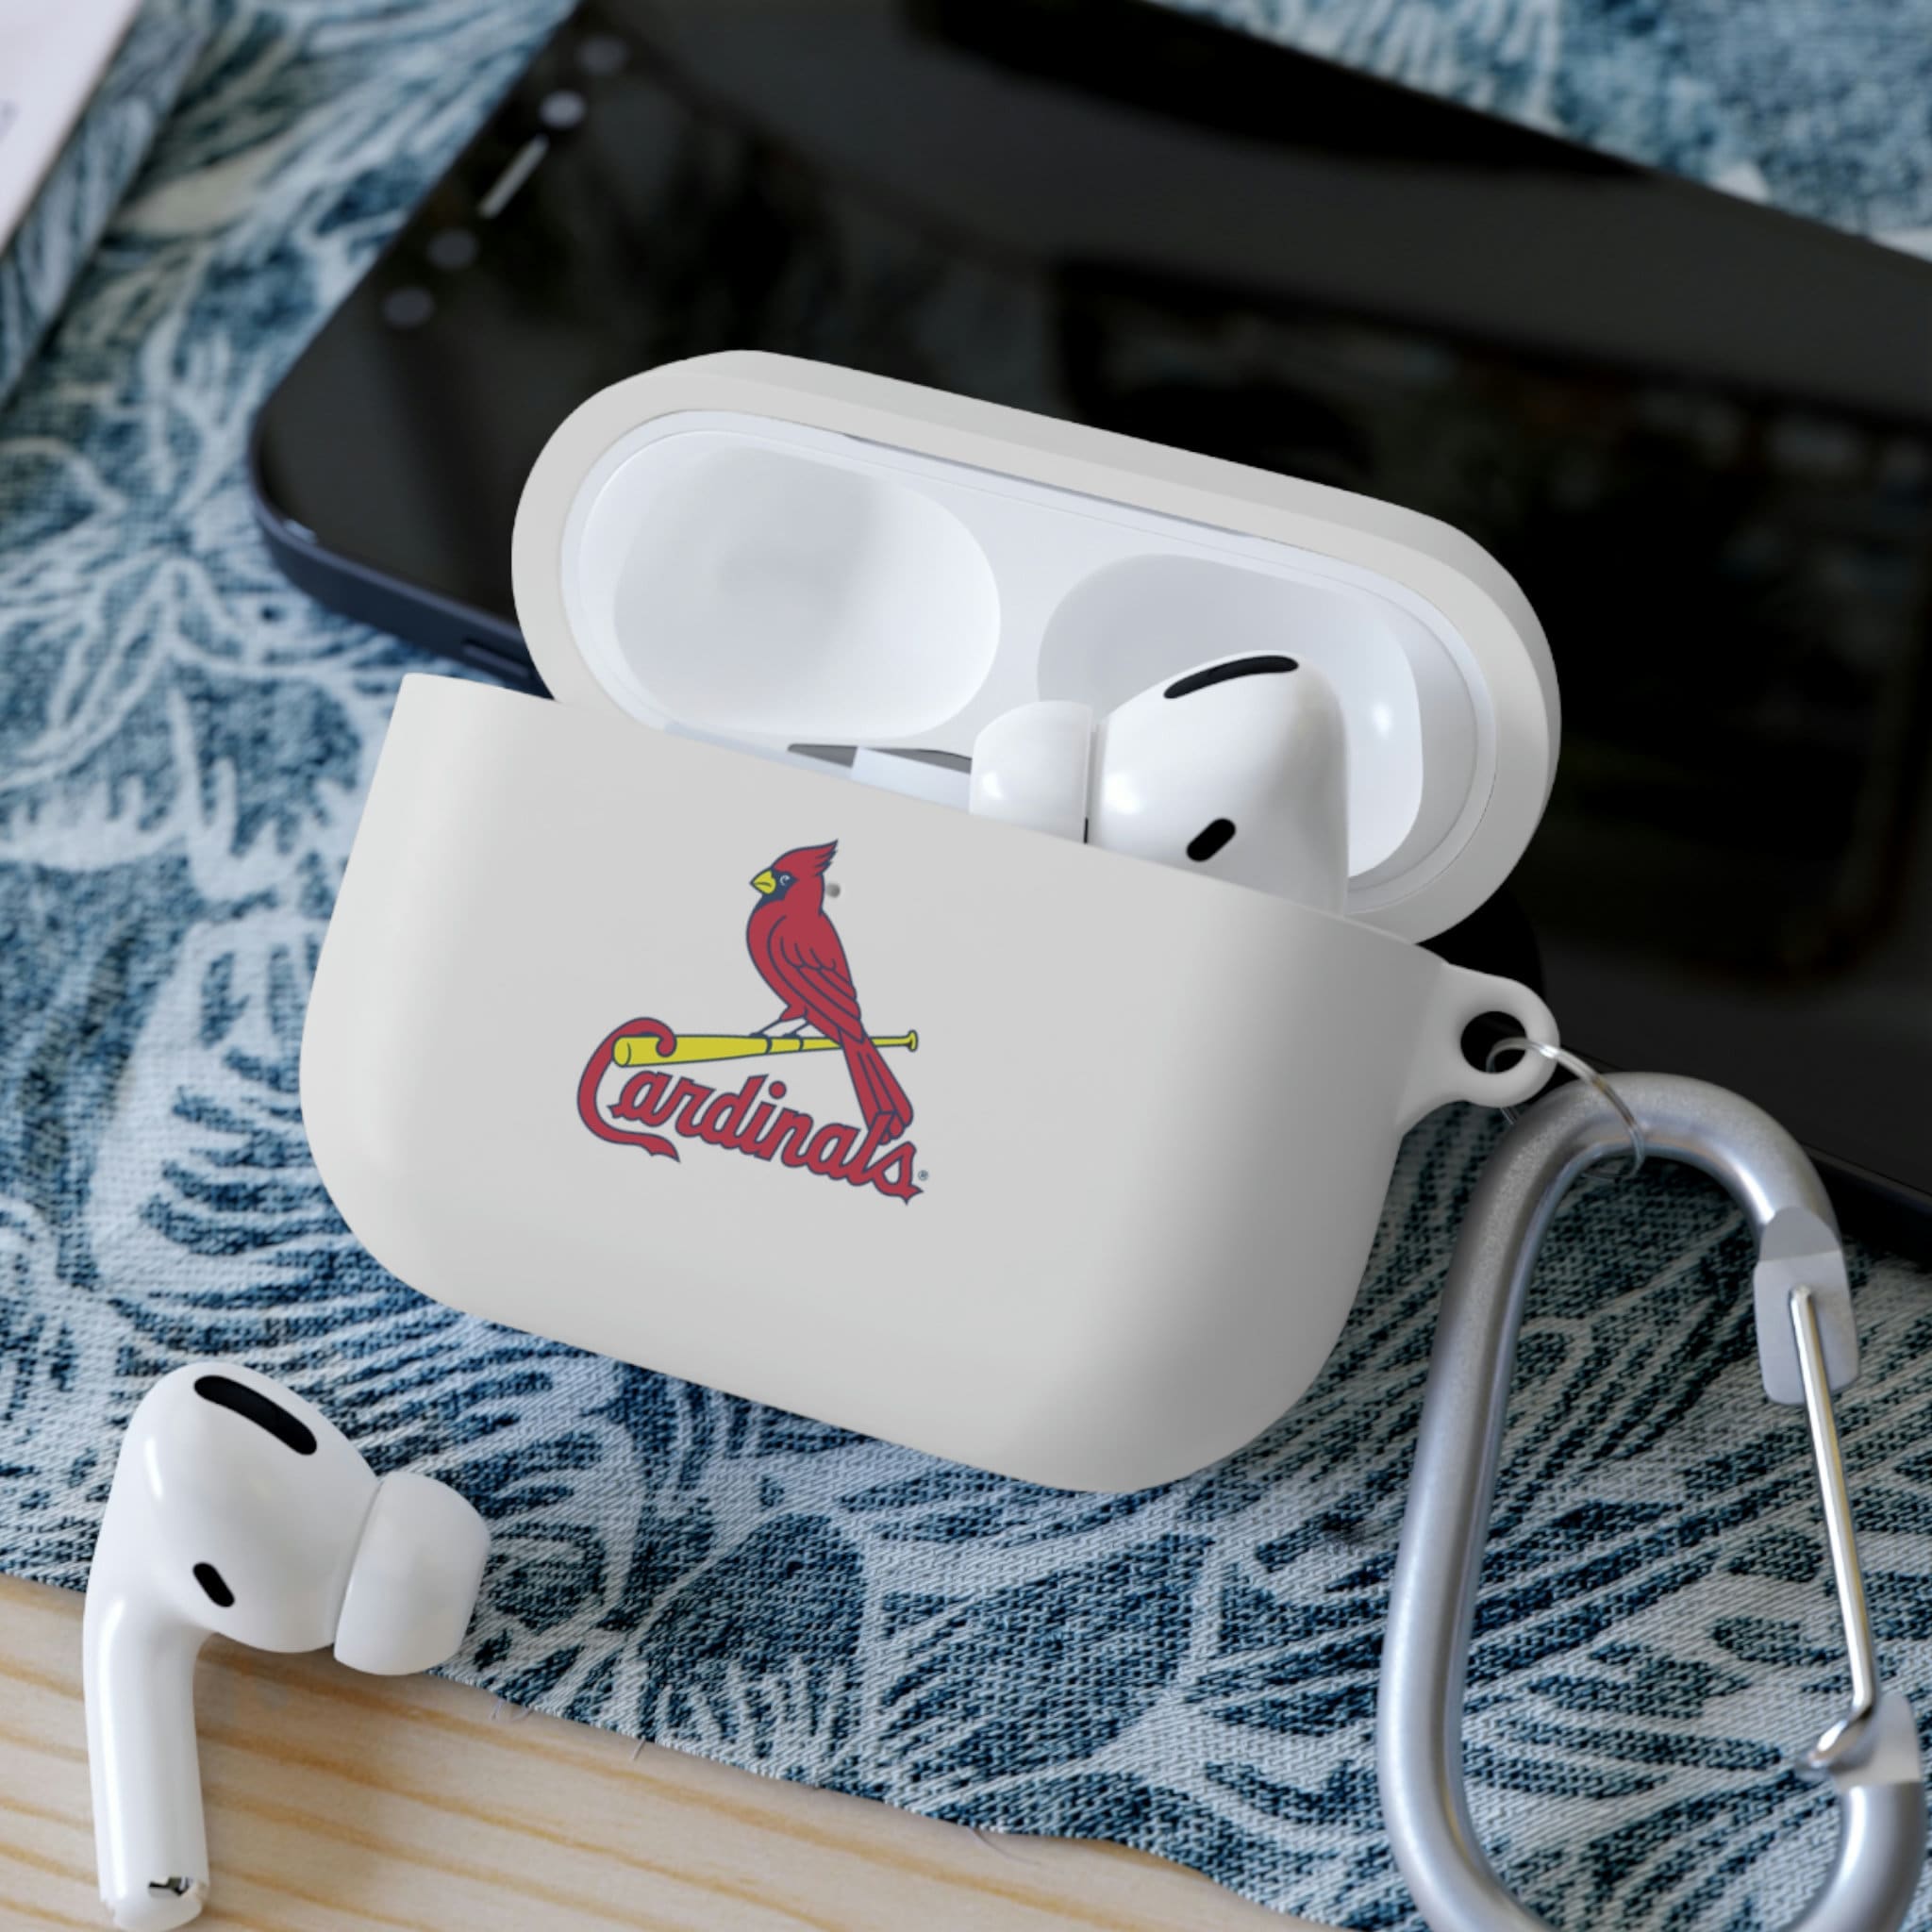 St. Louis Cardinals Engraved Apple Compatible AirPods Pro Case